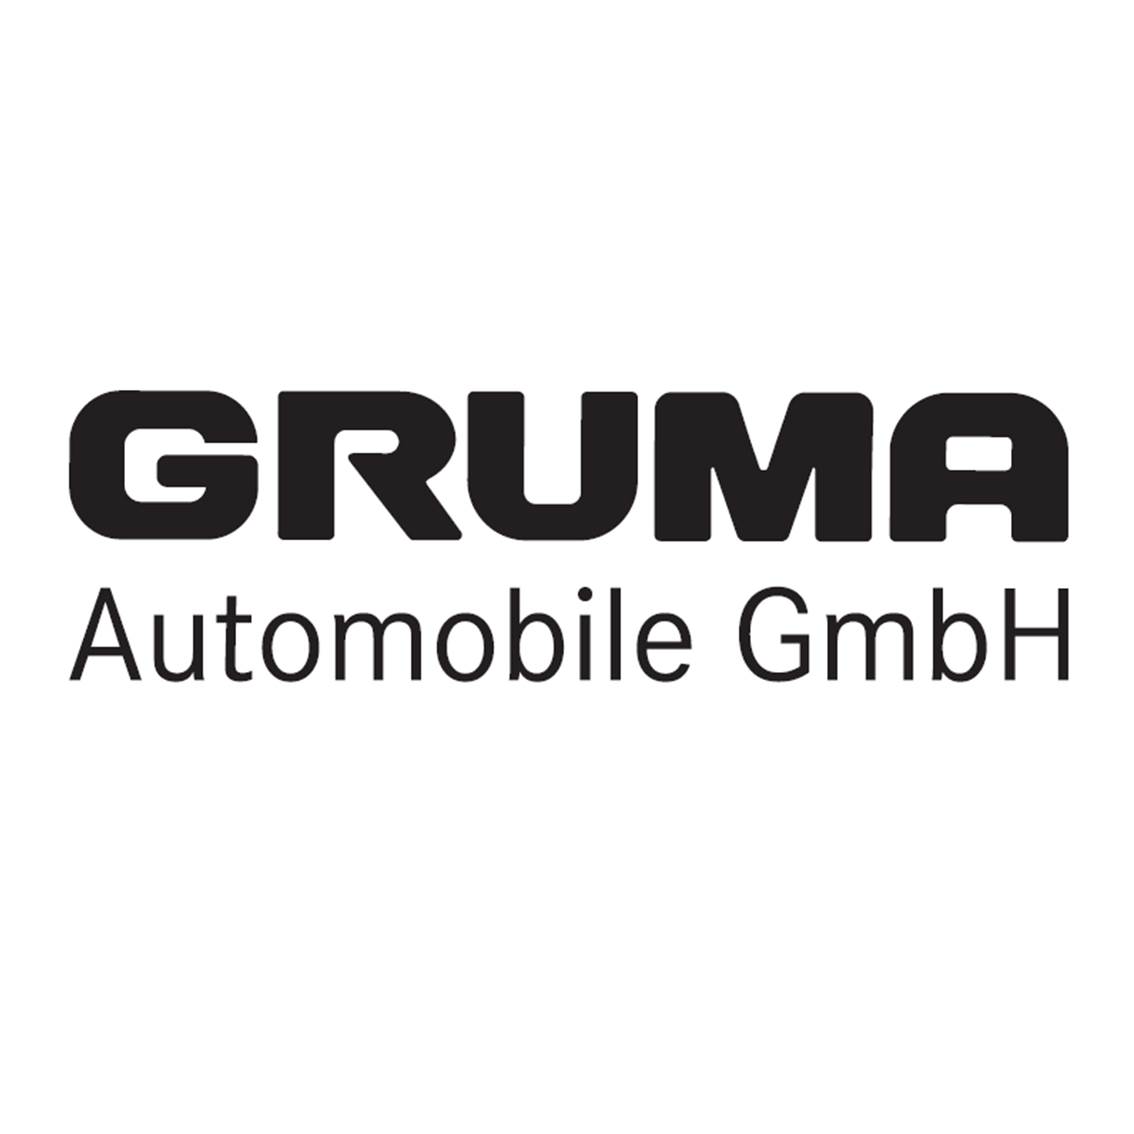 GRUMA Automobile.jpg